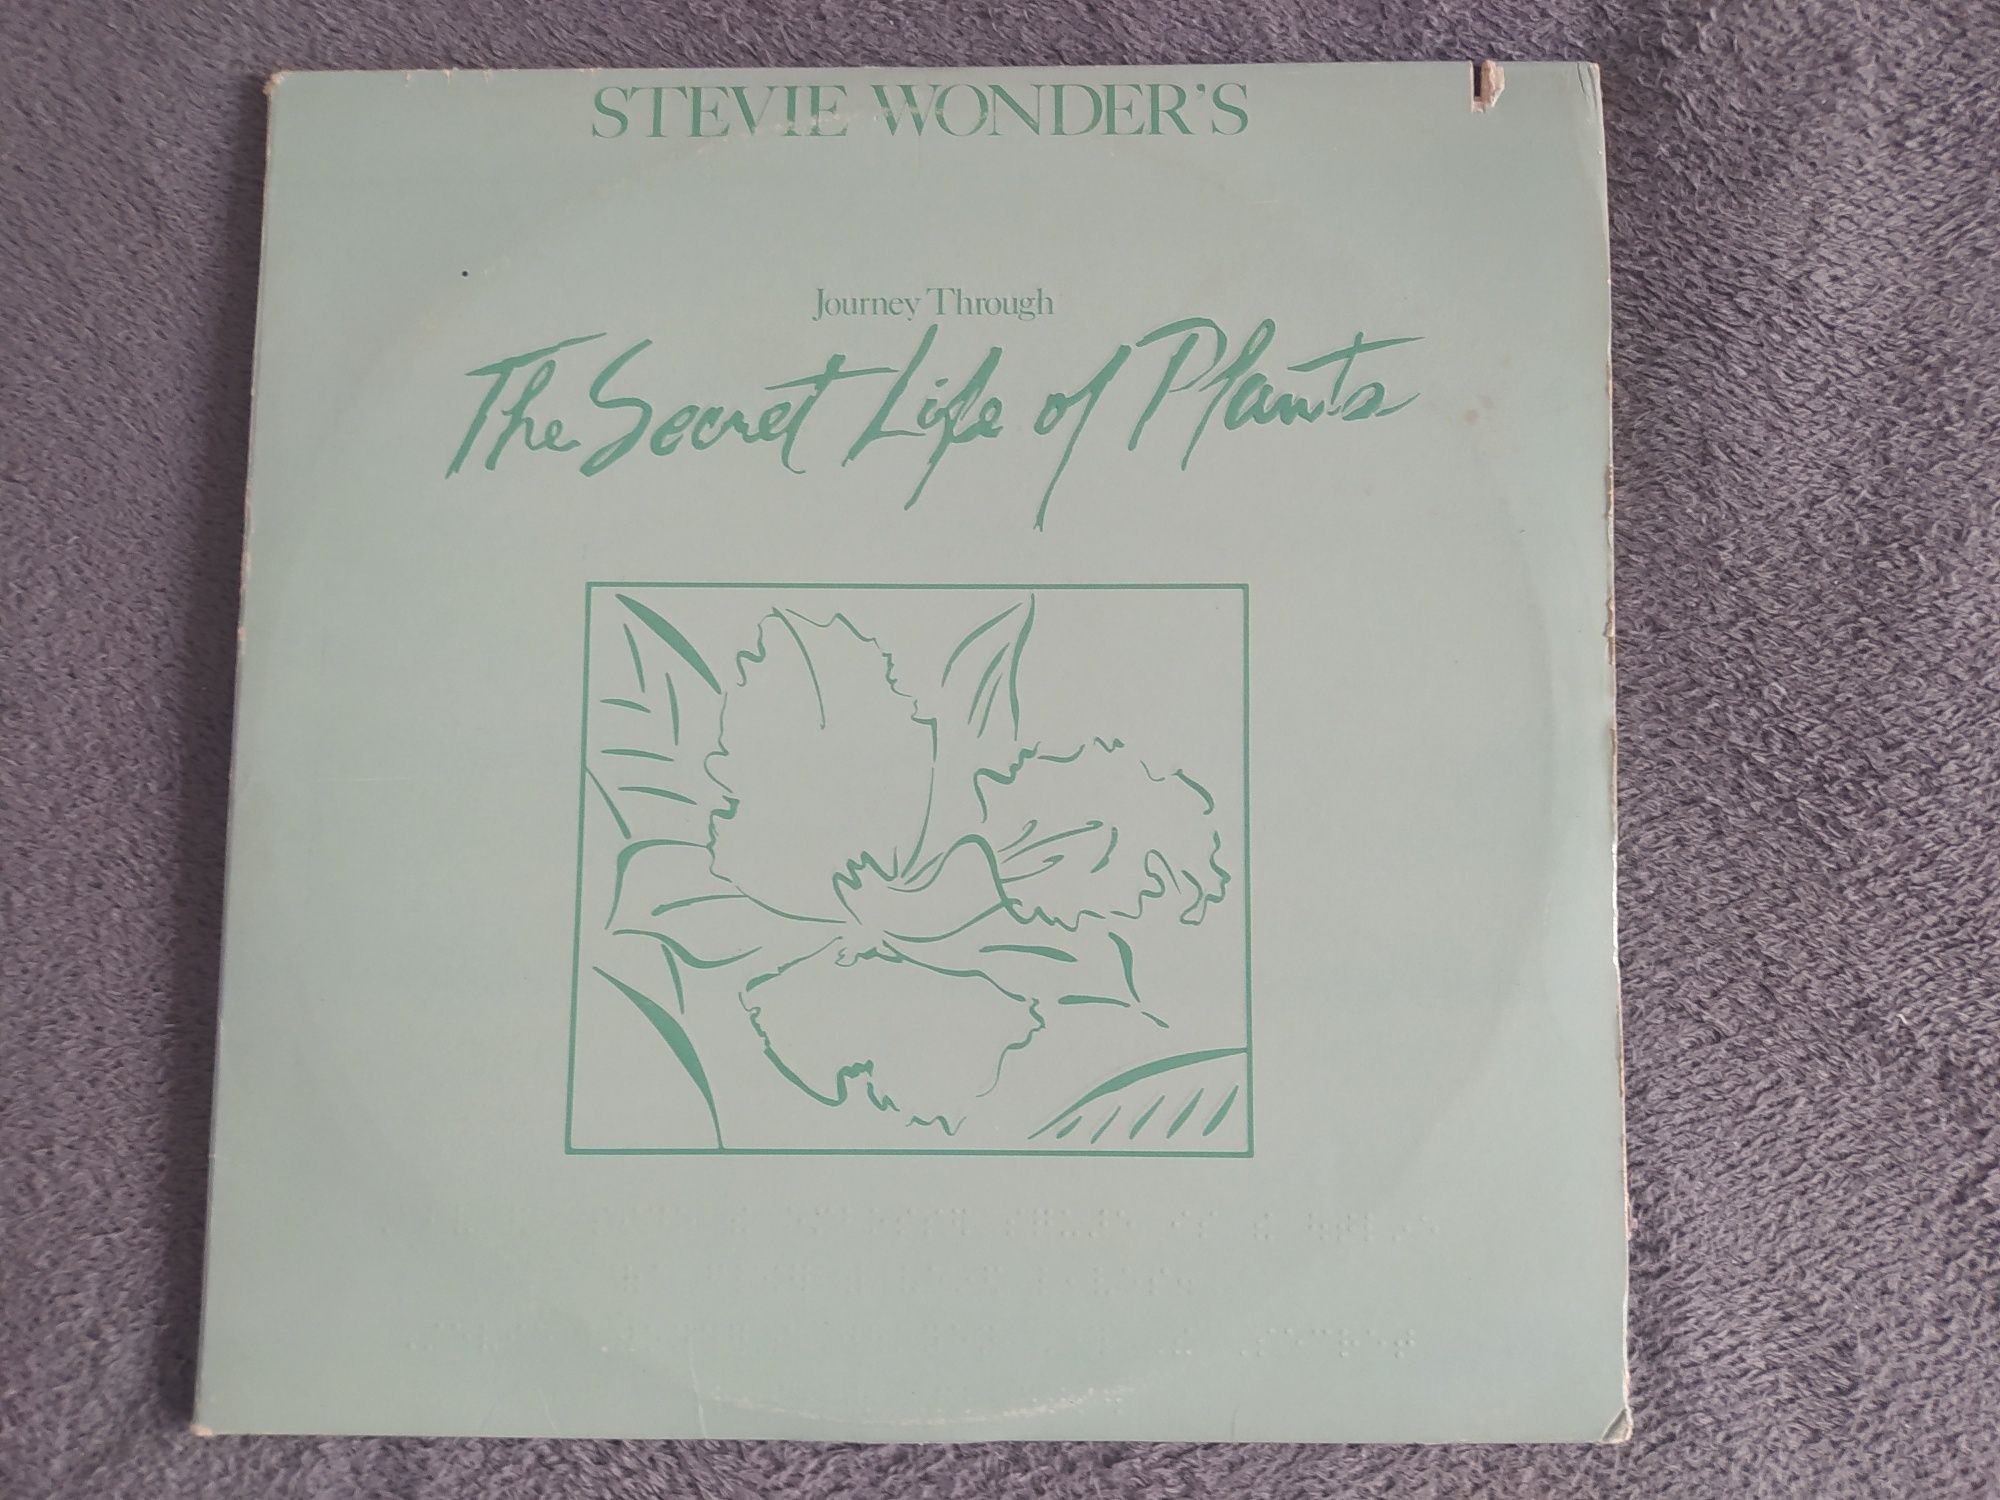 Stevie Wonder's Journey Through "The Secret Life of Plants" Vinyl